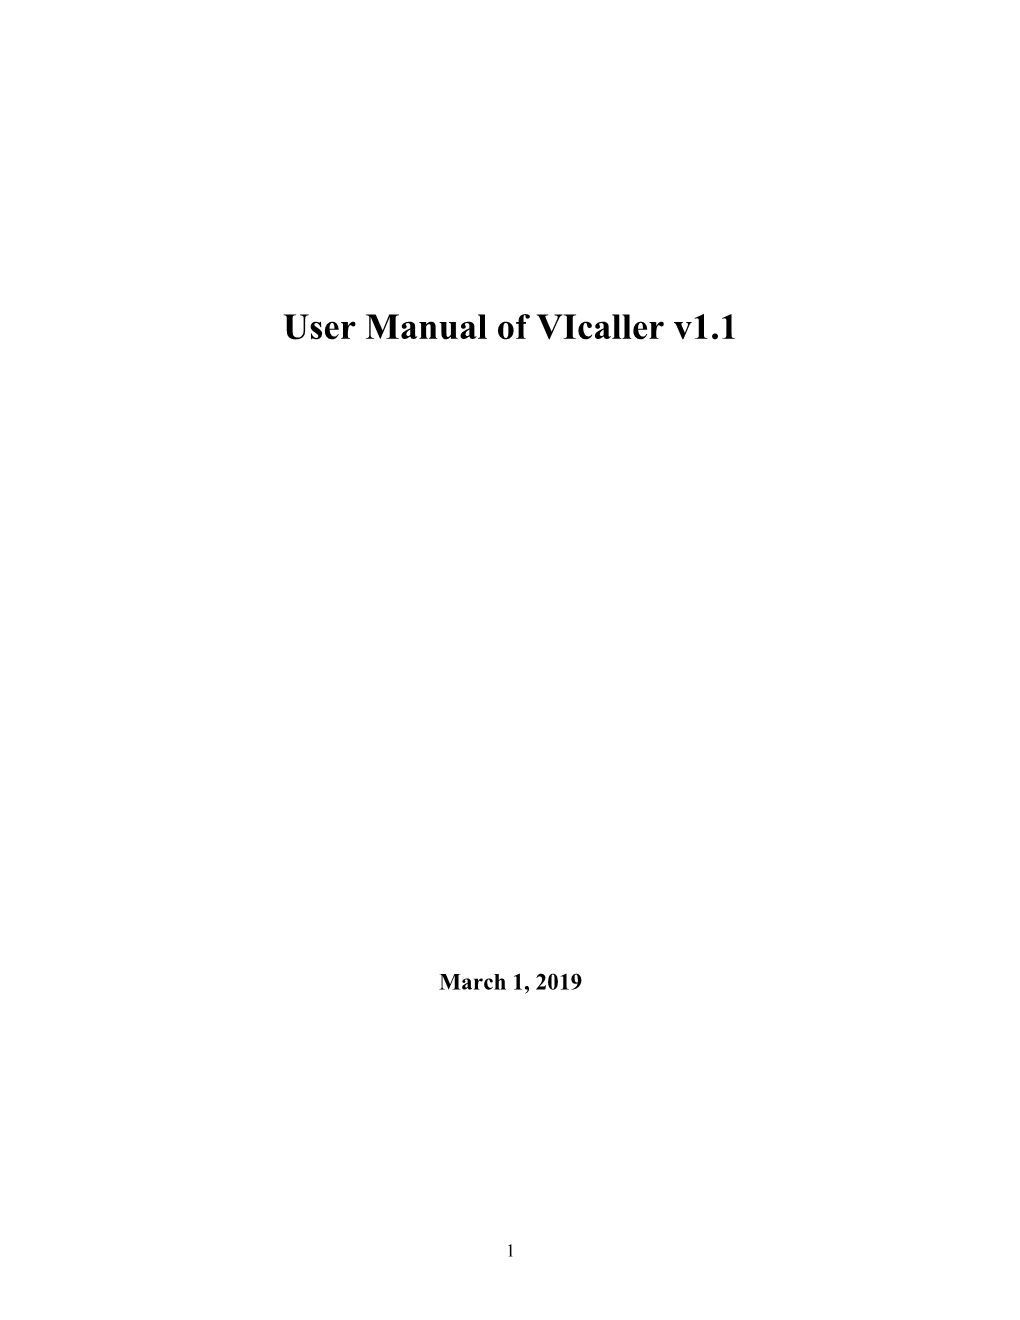 User Manual of Vicaller V1.1